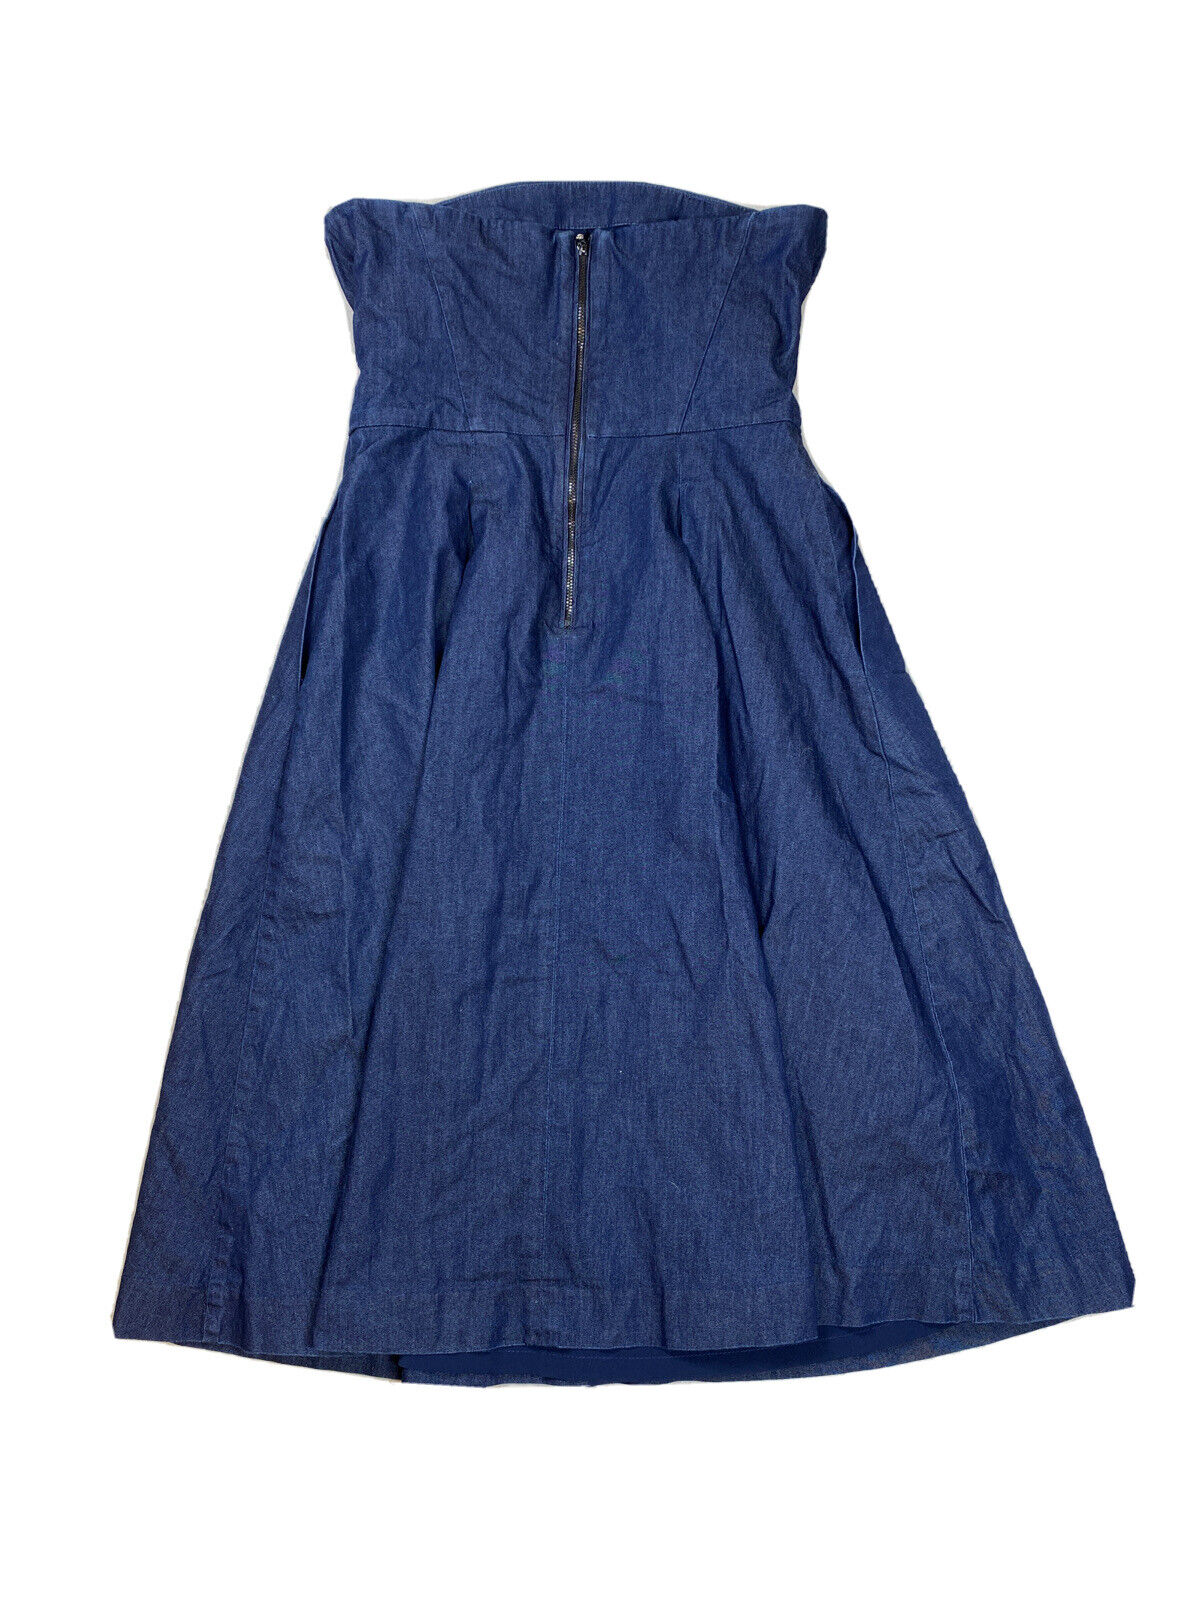 White House Black Market Women's Blue Strapless Fit & Flare Dress - 0